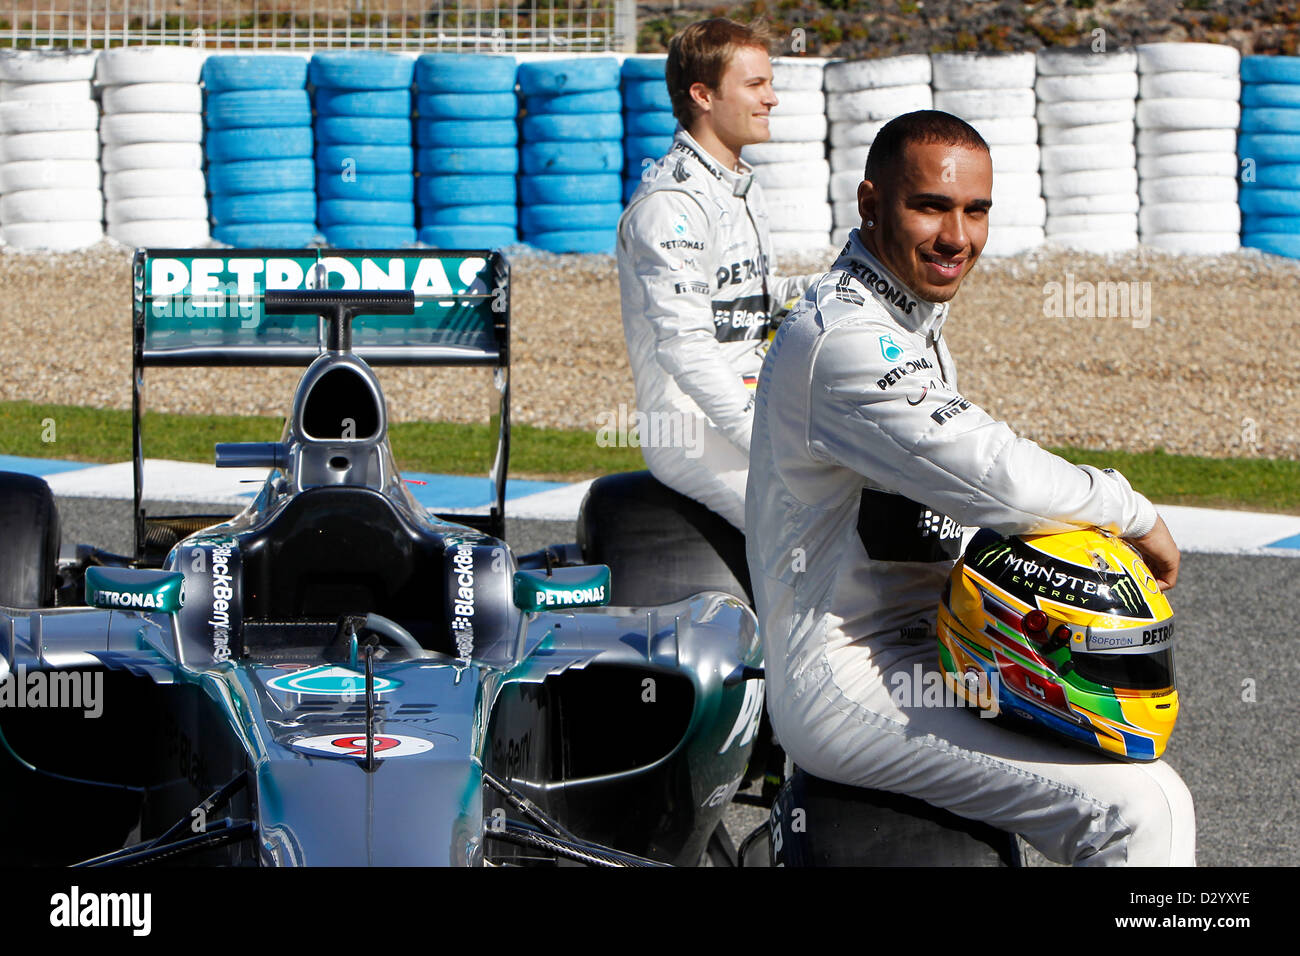 Motorsports: FIA Formula One World Championship 2013, F1 test Jerez, Mercedes GP Launch, Lewis Hamilton (GBR, Mercedes GP), Nico Rosberg (GER, Mercedes GP) Stock Photo